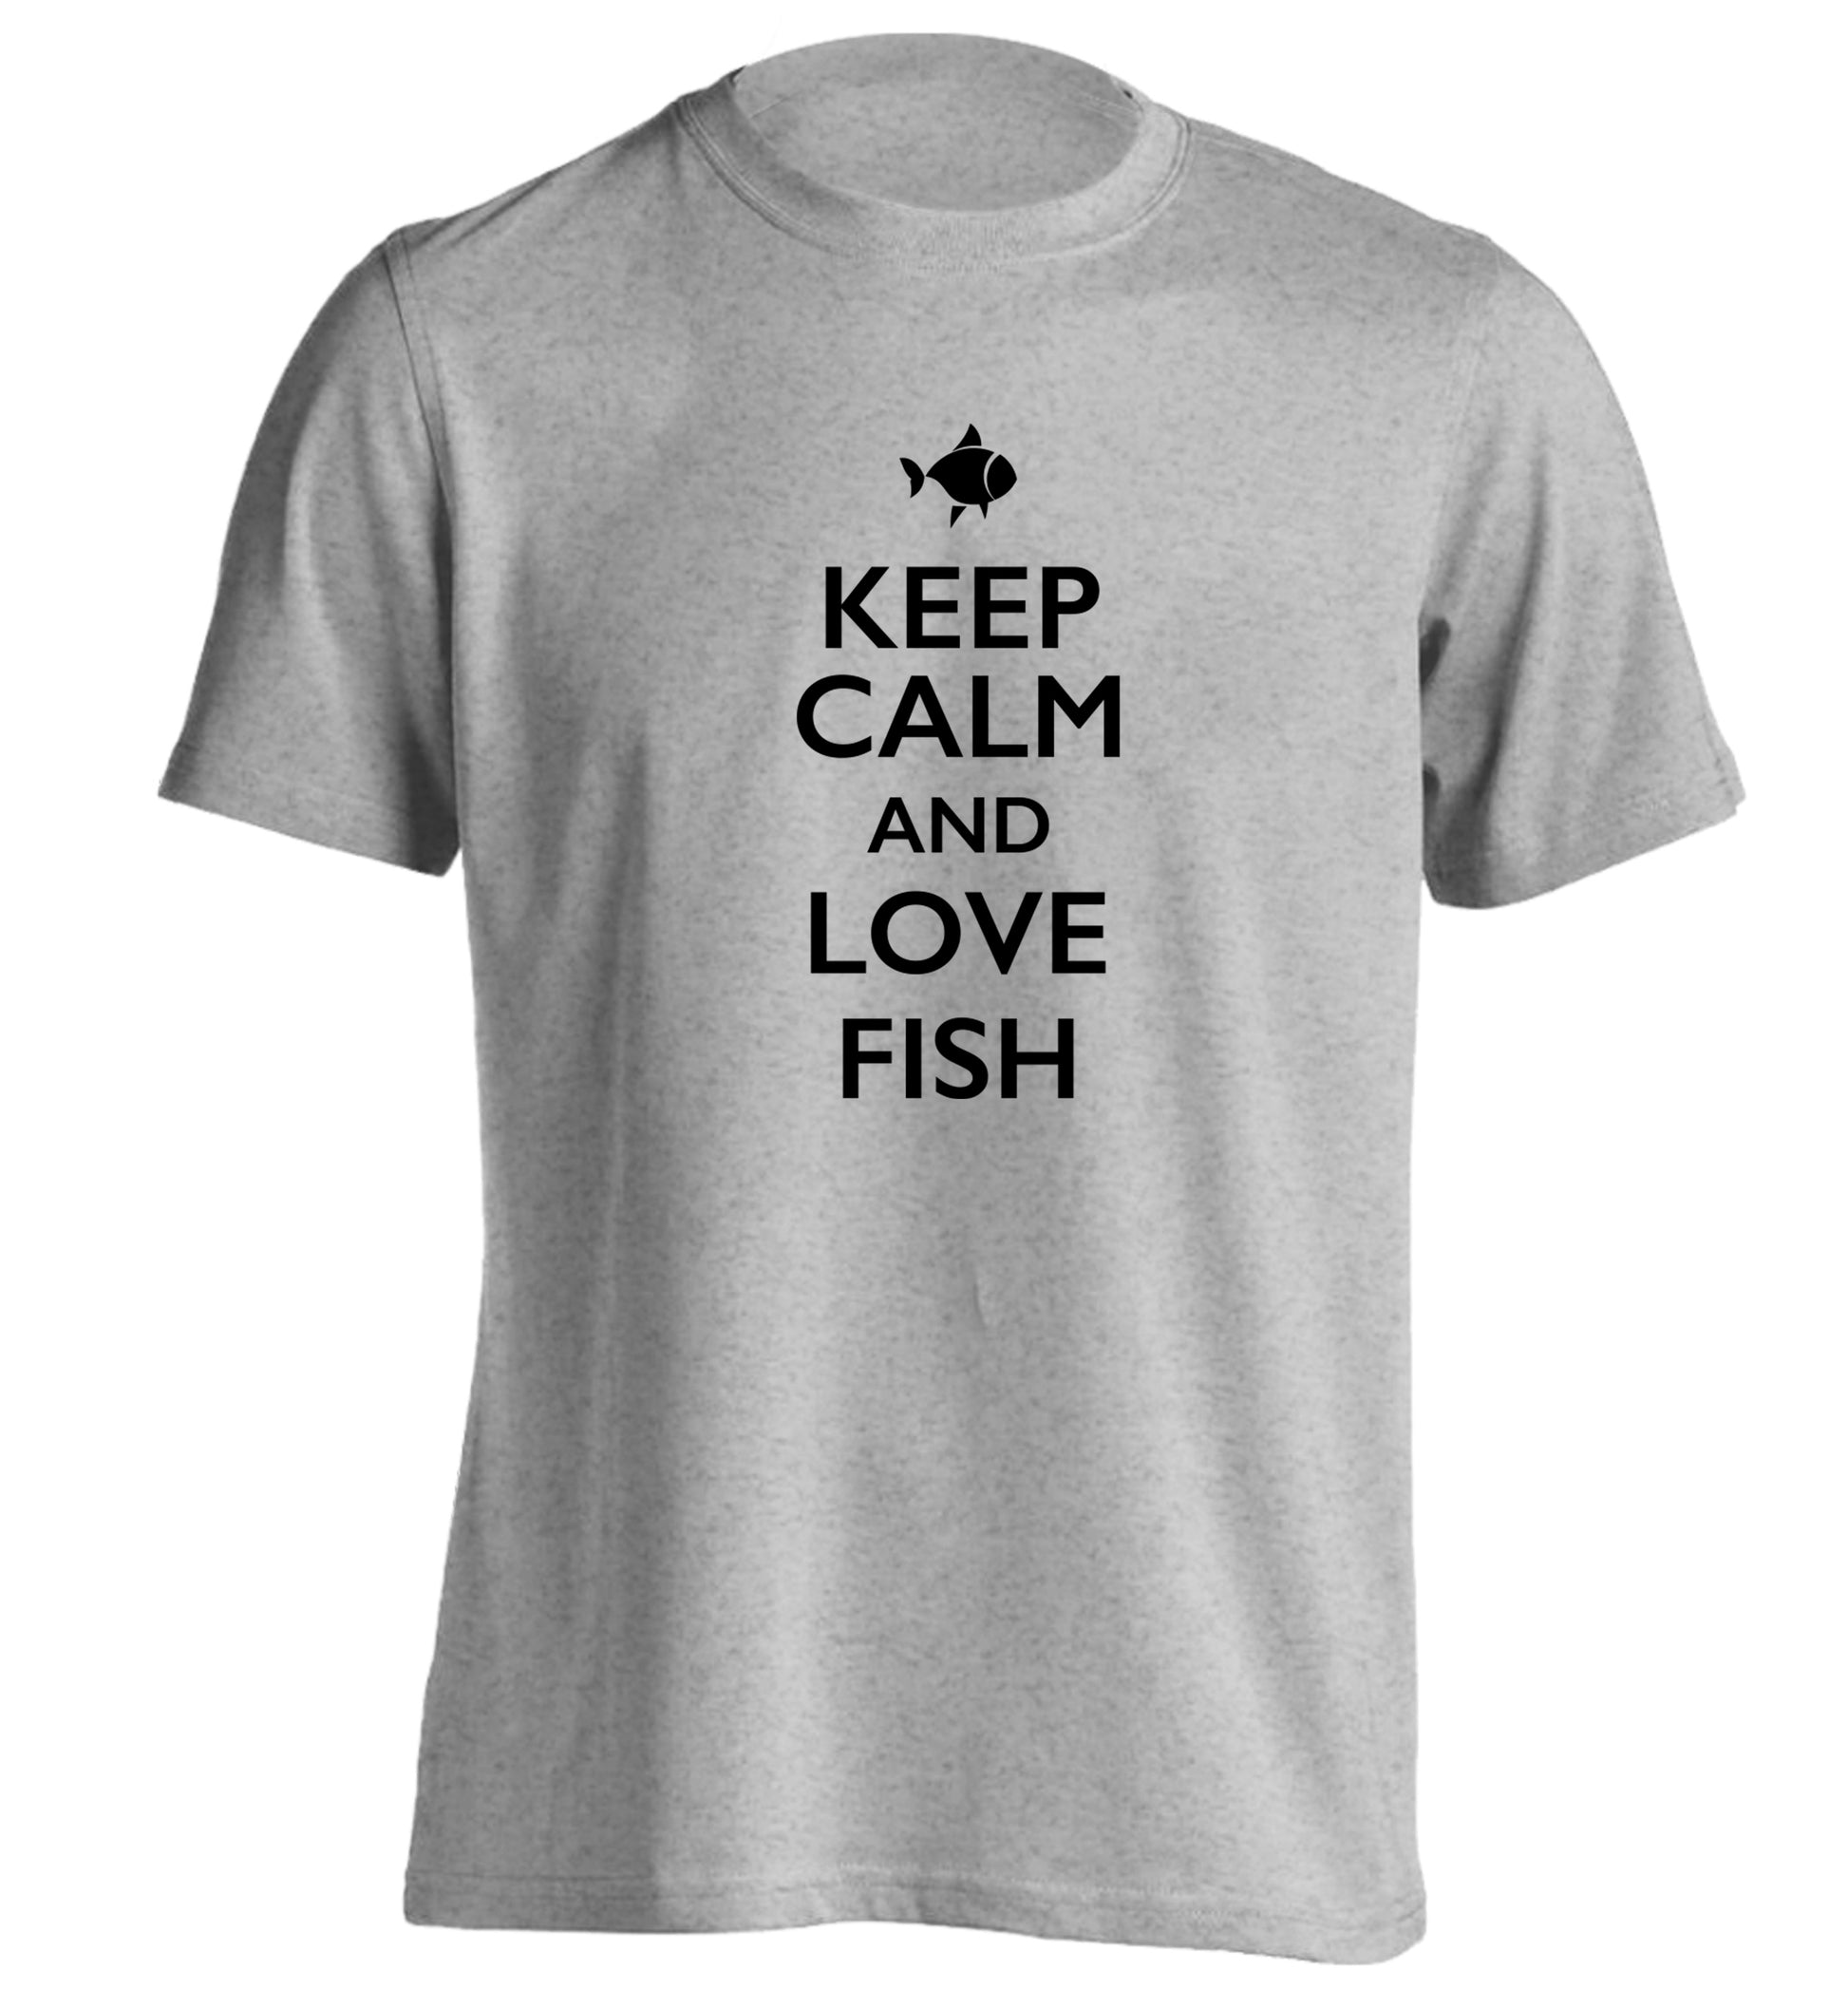 Keep calm and love fish adults unisex grey Tshirt 2XL